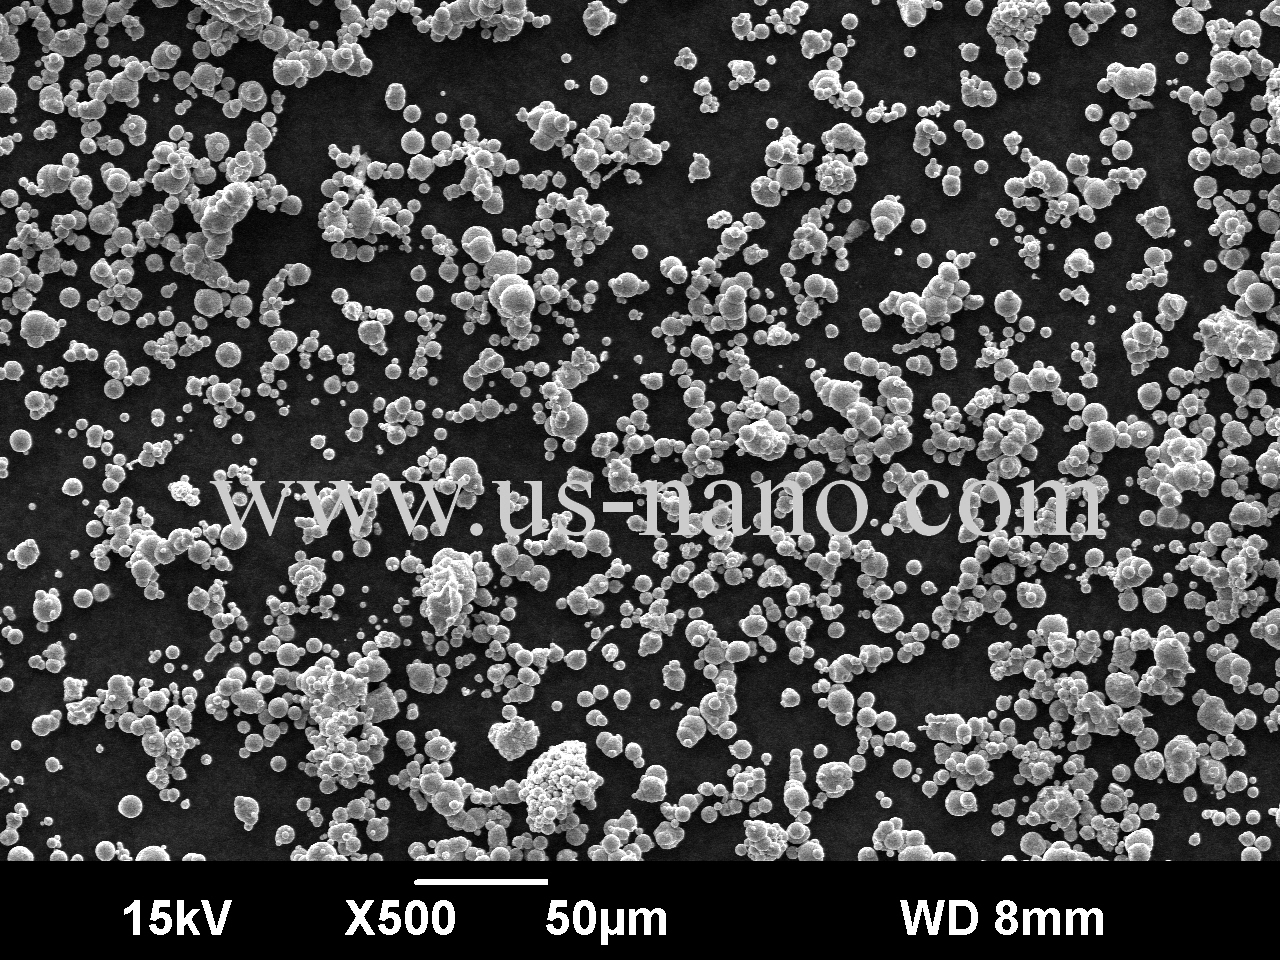 Carbonyl iron powder, SEM - Stock Image - C009/0610 - Science